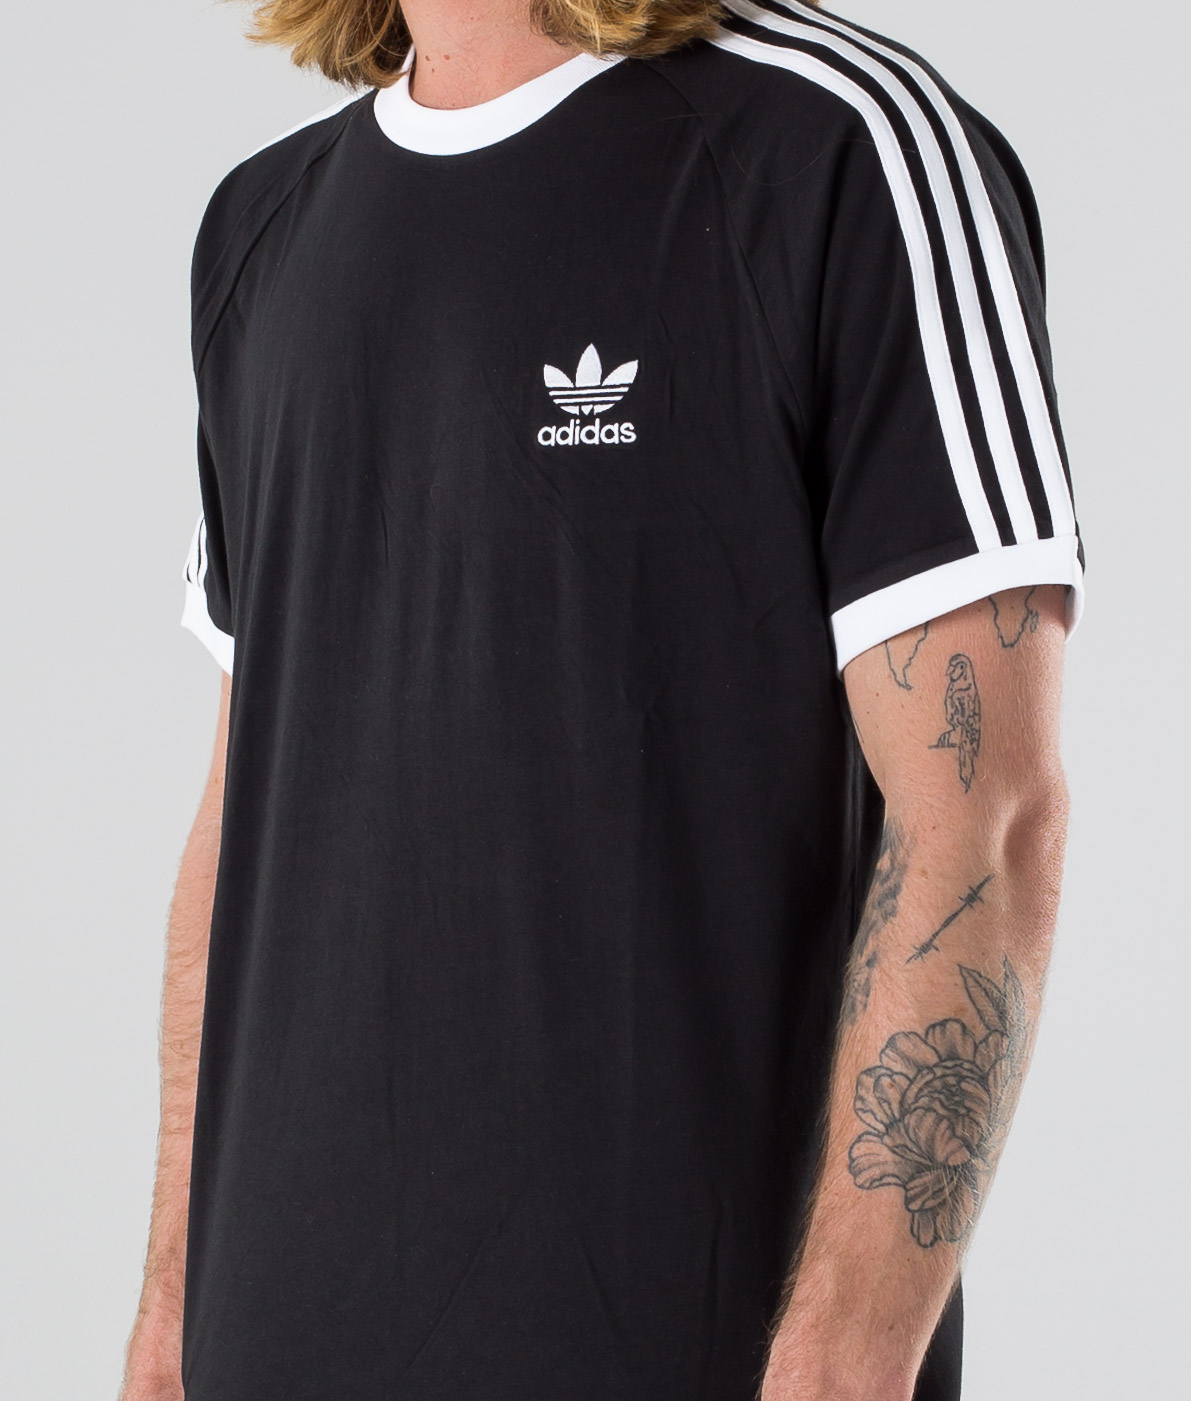 adidas black shirt with white stripes